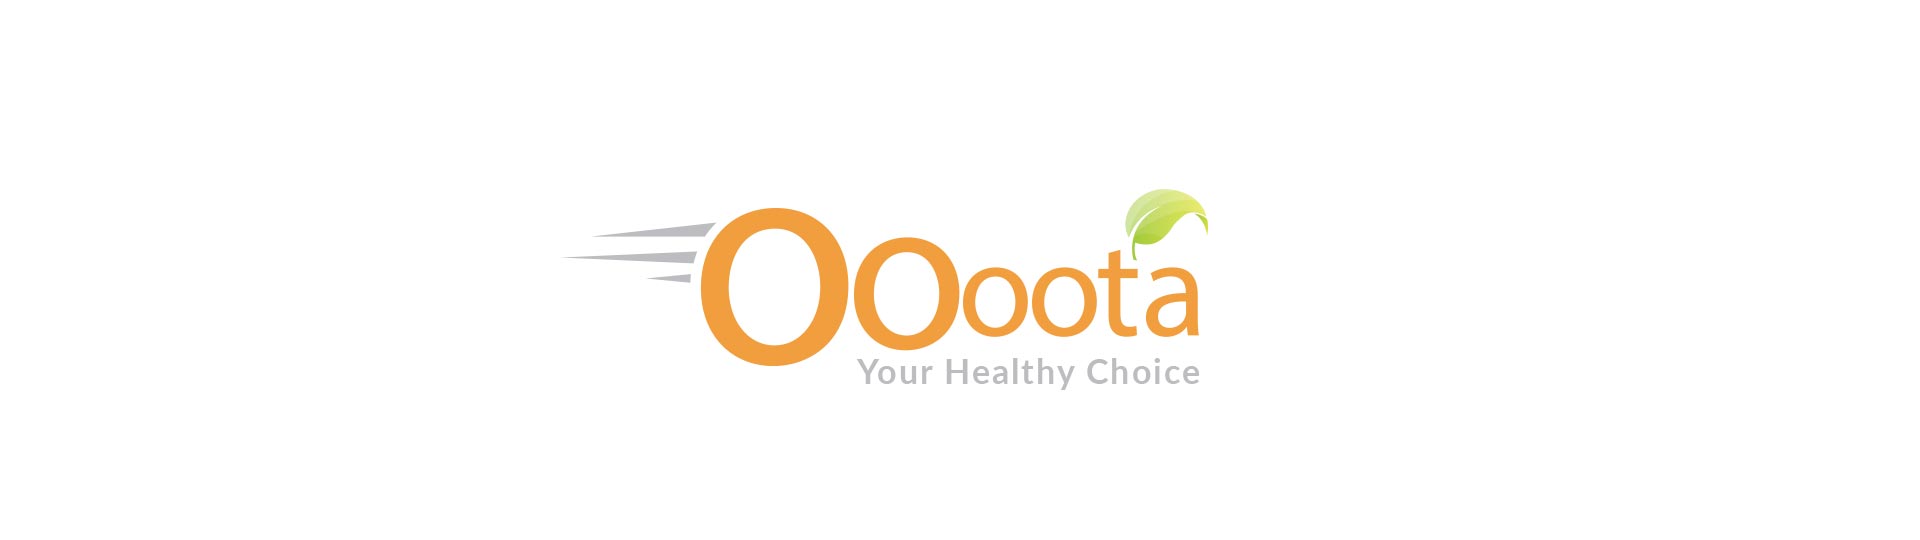 Oooota | The Brand Design